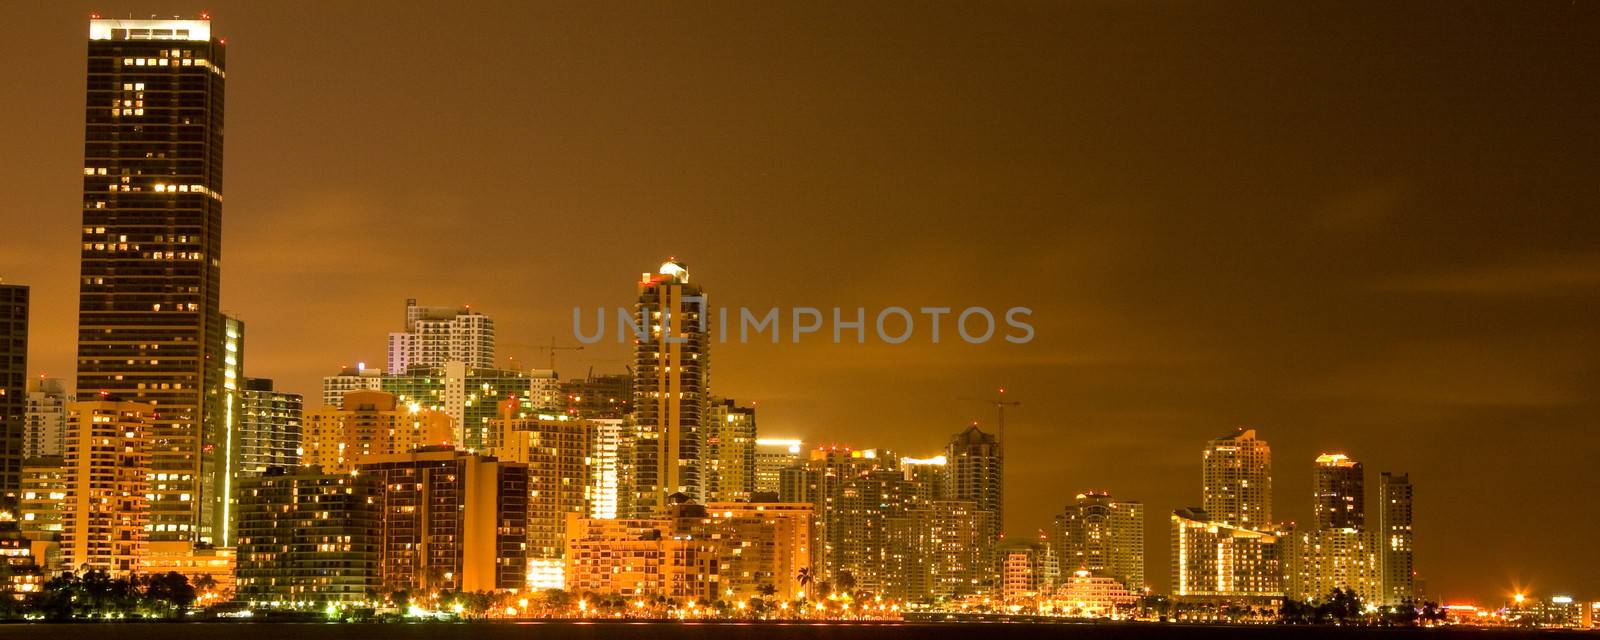 Miami at night by CelsoDiniz